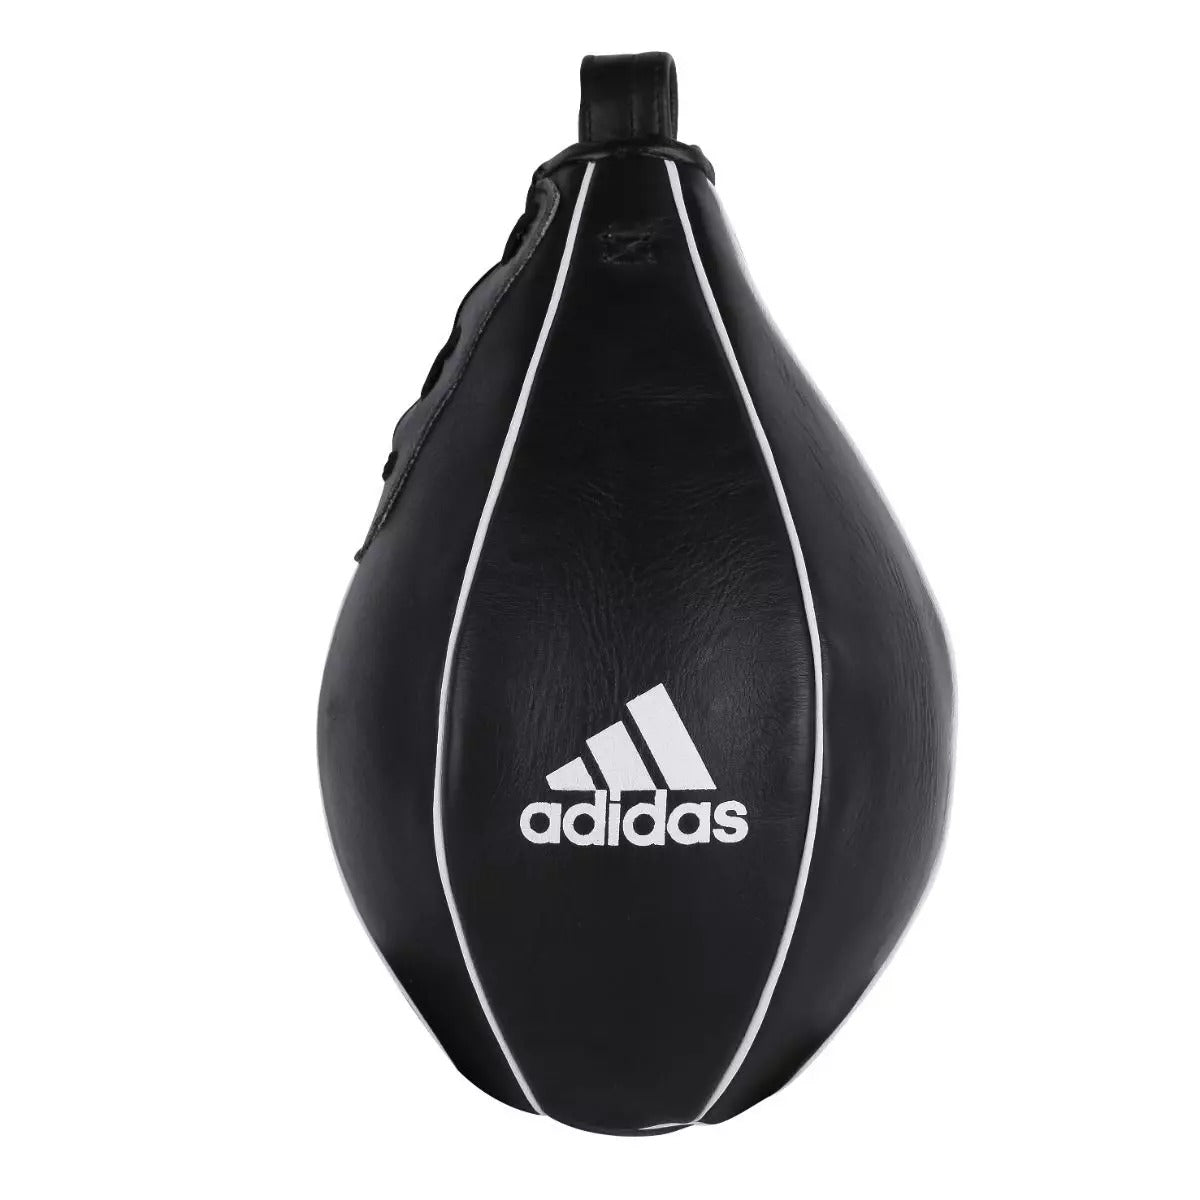 adidas Leather Boxing Speed Ball Striking Leather Punching Bag